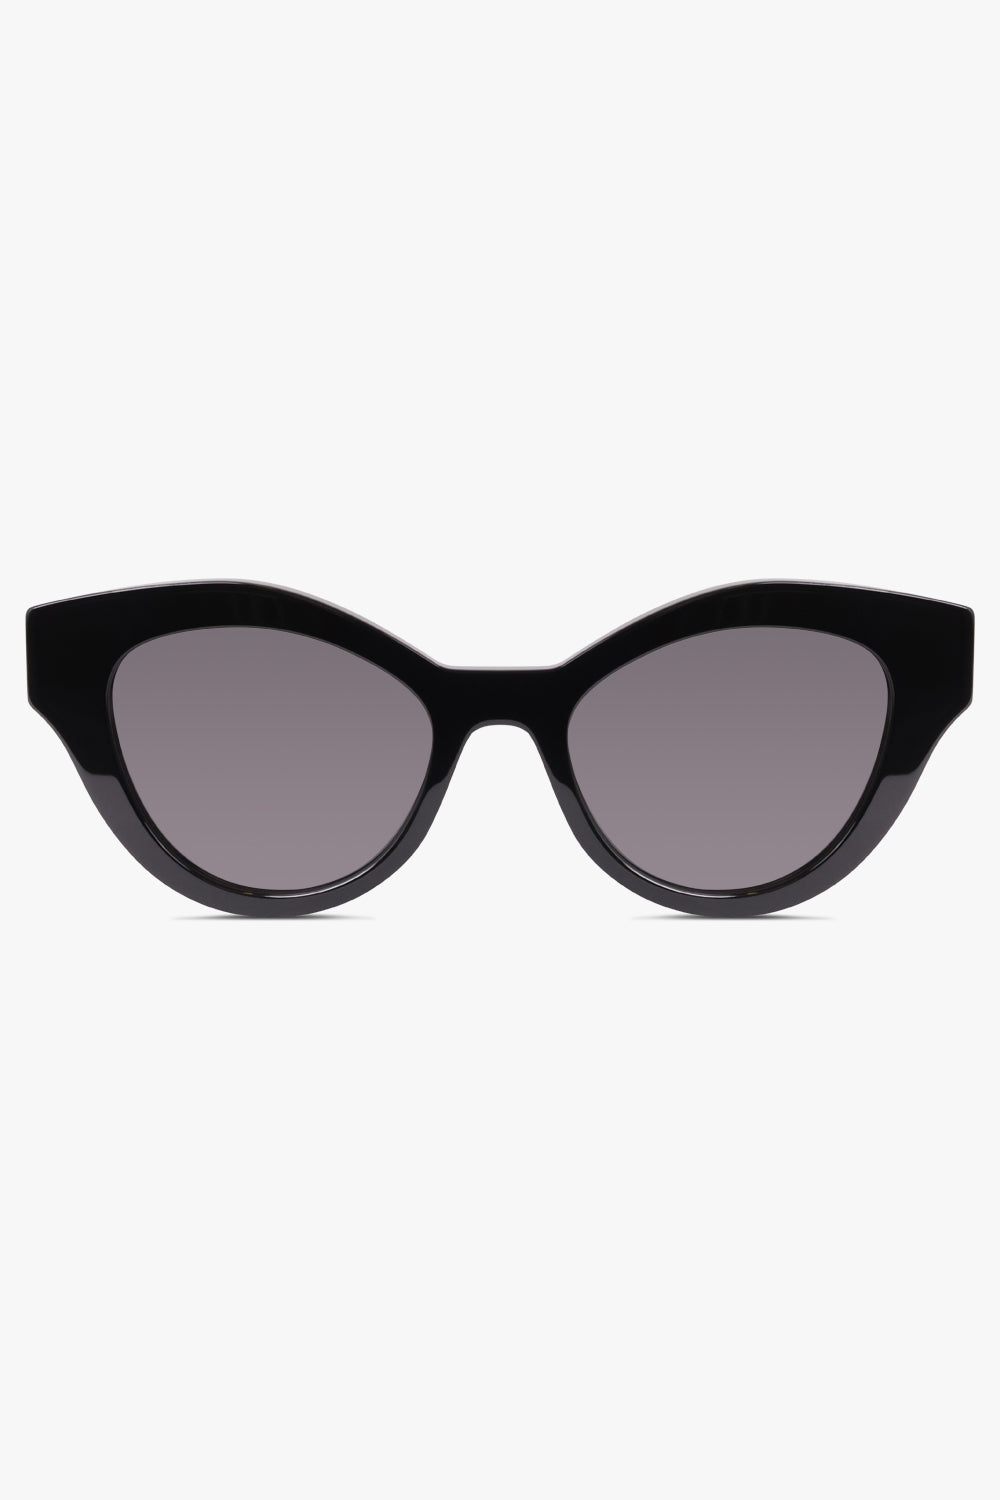 GUCCI ACCESSORIES BLACK / BLACK GG0957S 51 Round Cat Eye Sunglasses | Black